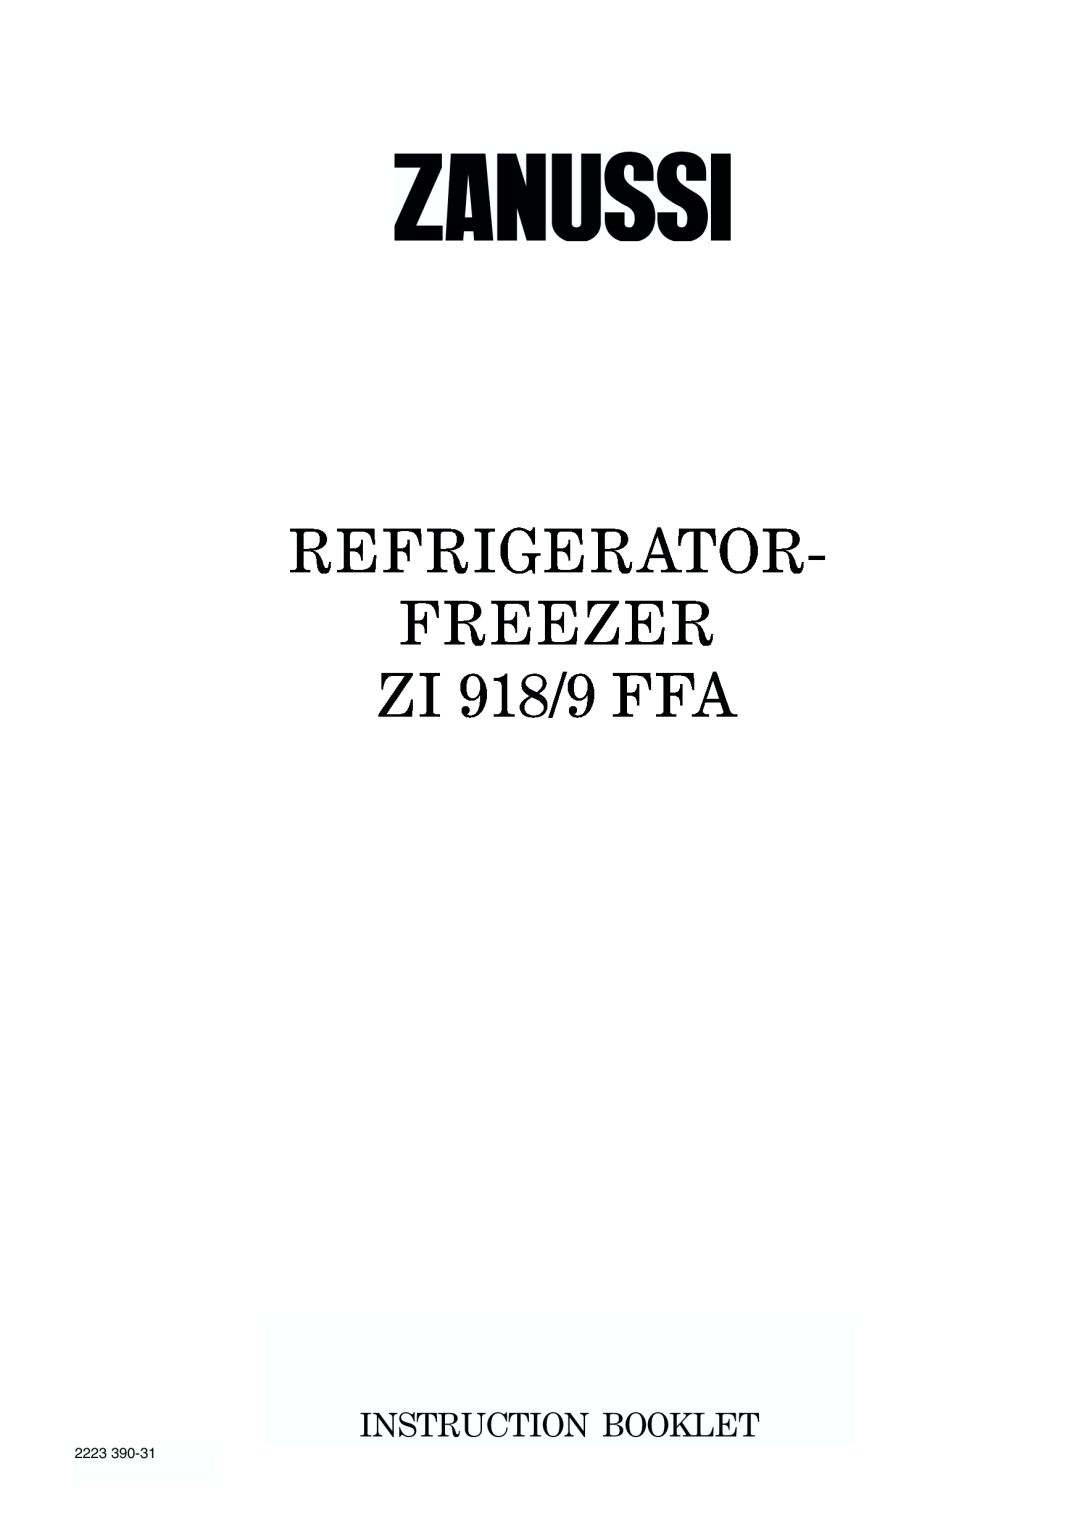 Zanussi manual REFRIGERATOR FREEZER ZI 918/9 FFA, Instruction Booklet 